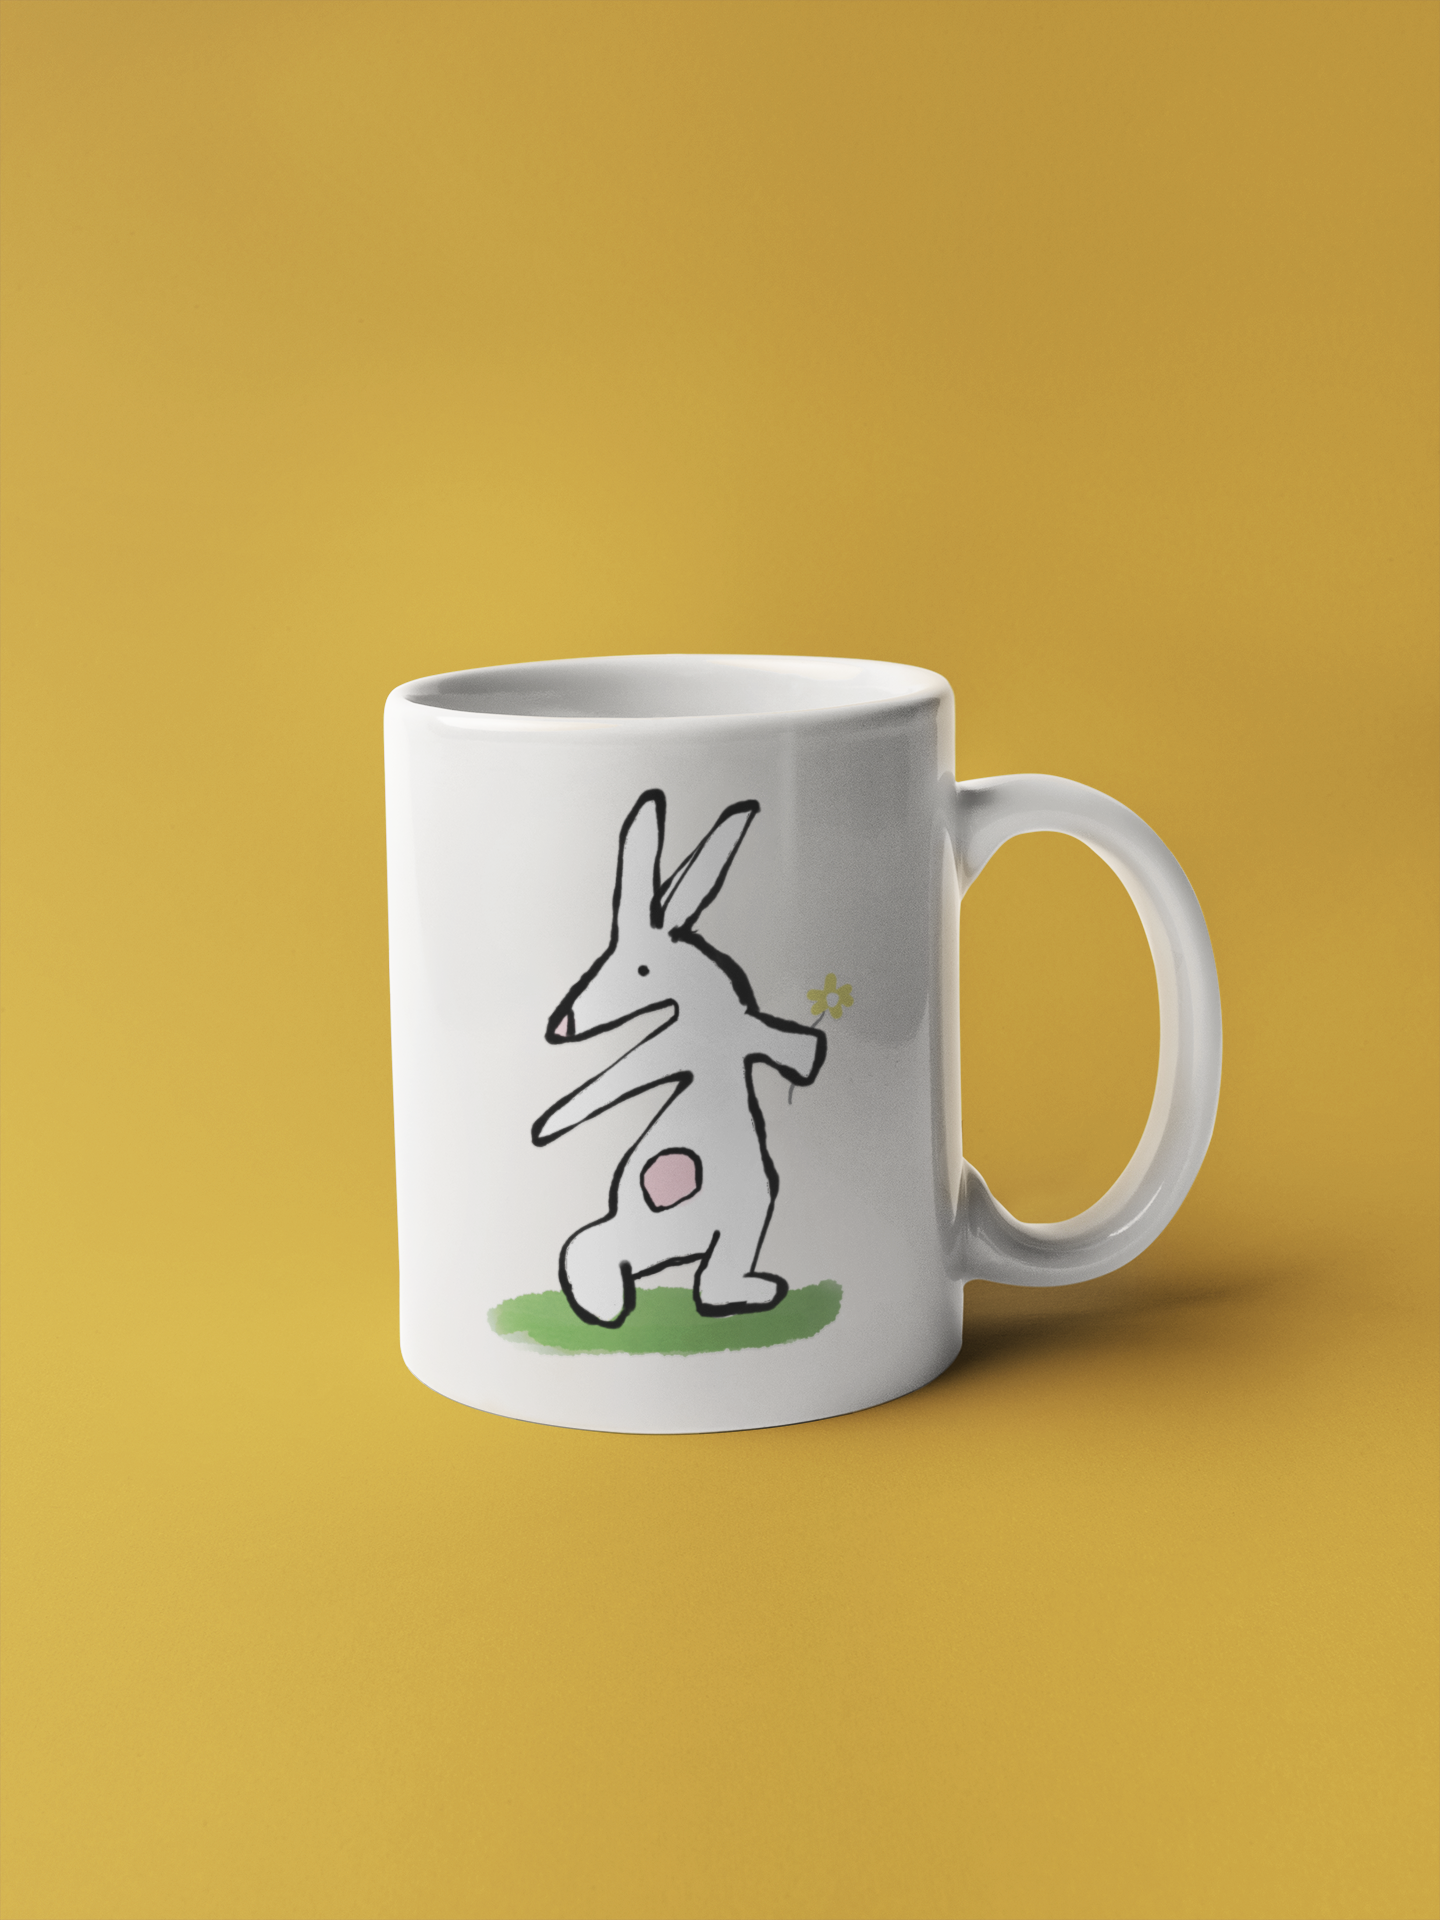 Illustrated Flower Bunny mug Rabbit design by Hector and Bone